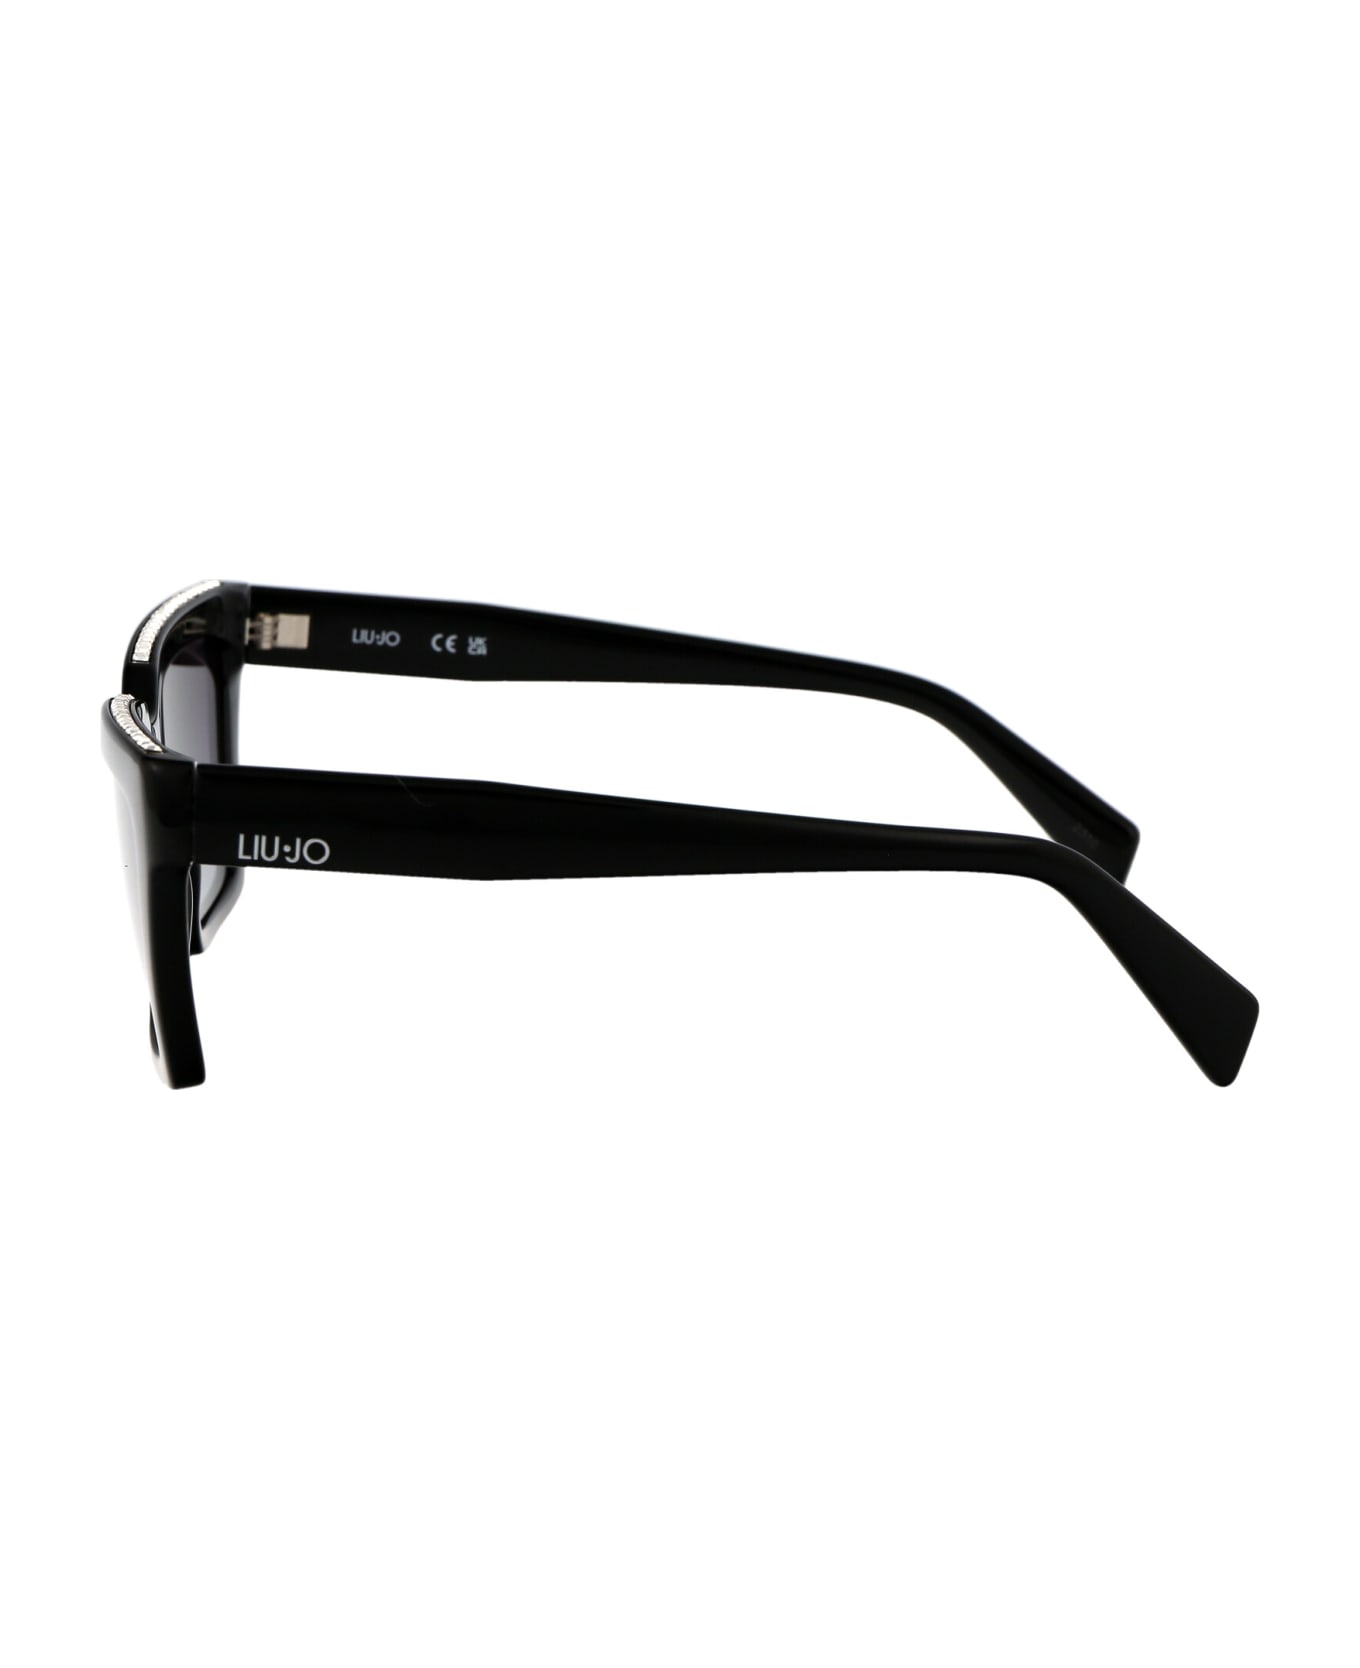 Liu-Jo Lj793sr Sunglasses - 001 BLACK